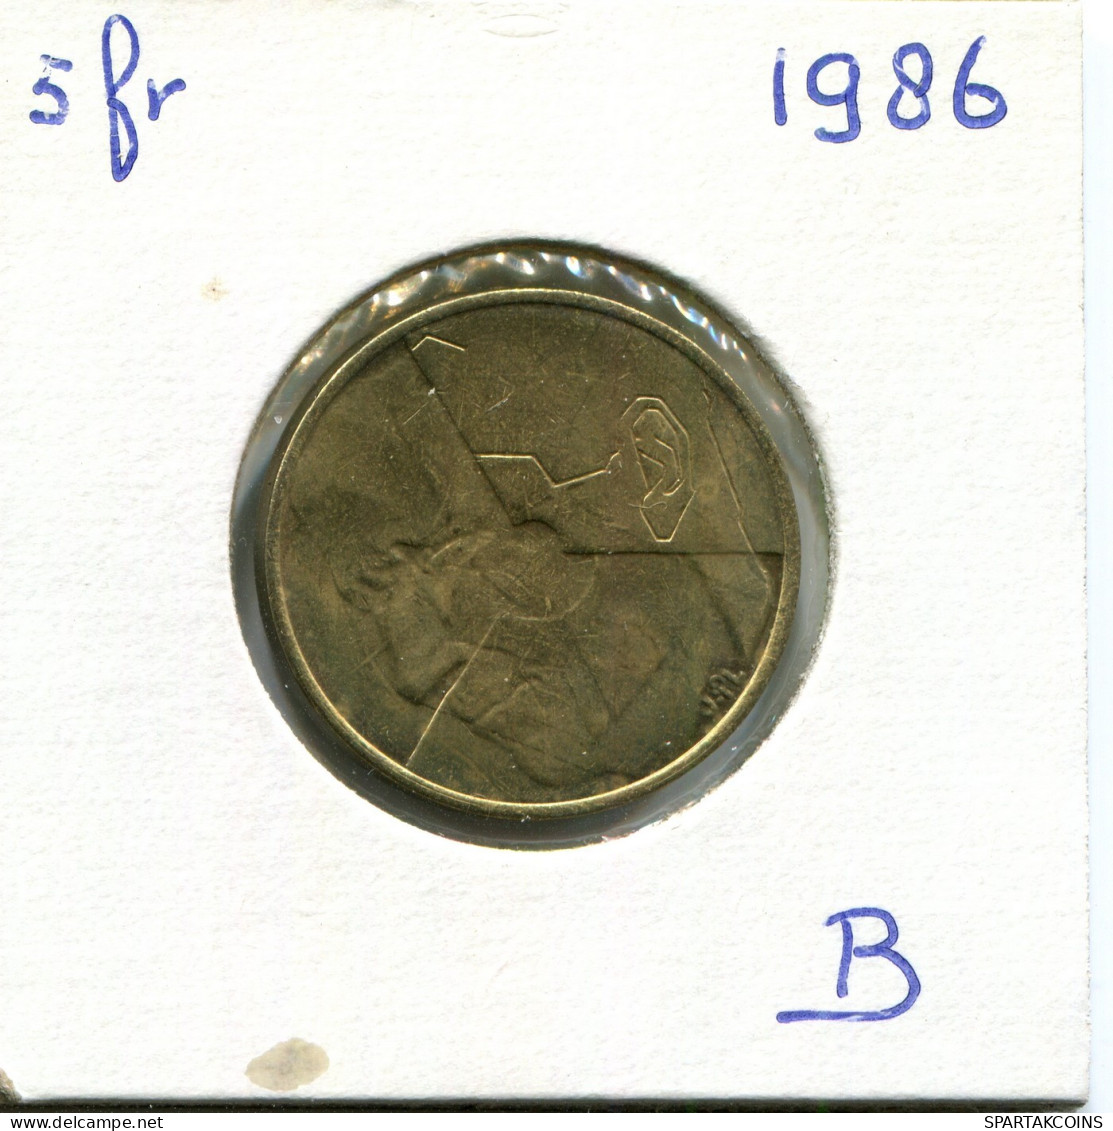 5 FRANCS 1986 DUTCH Text BELGIUM Coin #AW884.U.A - 5 Francs